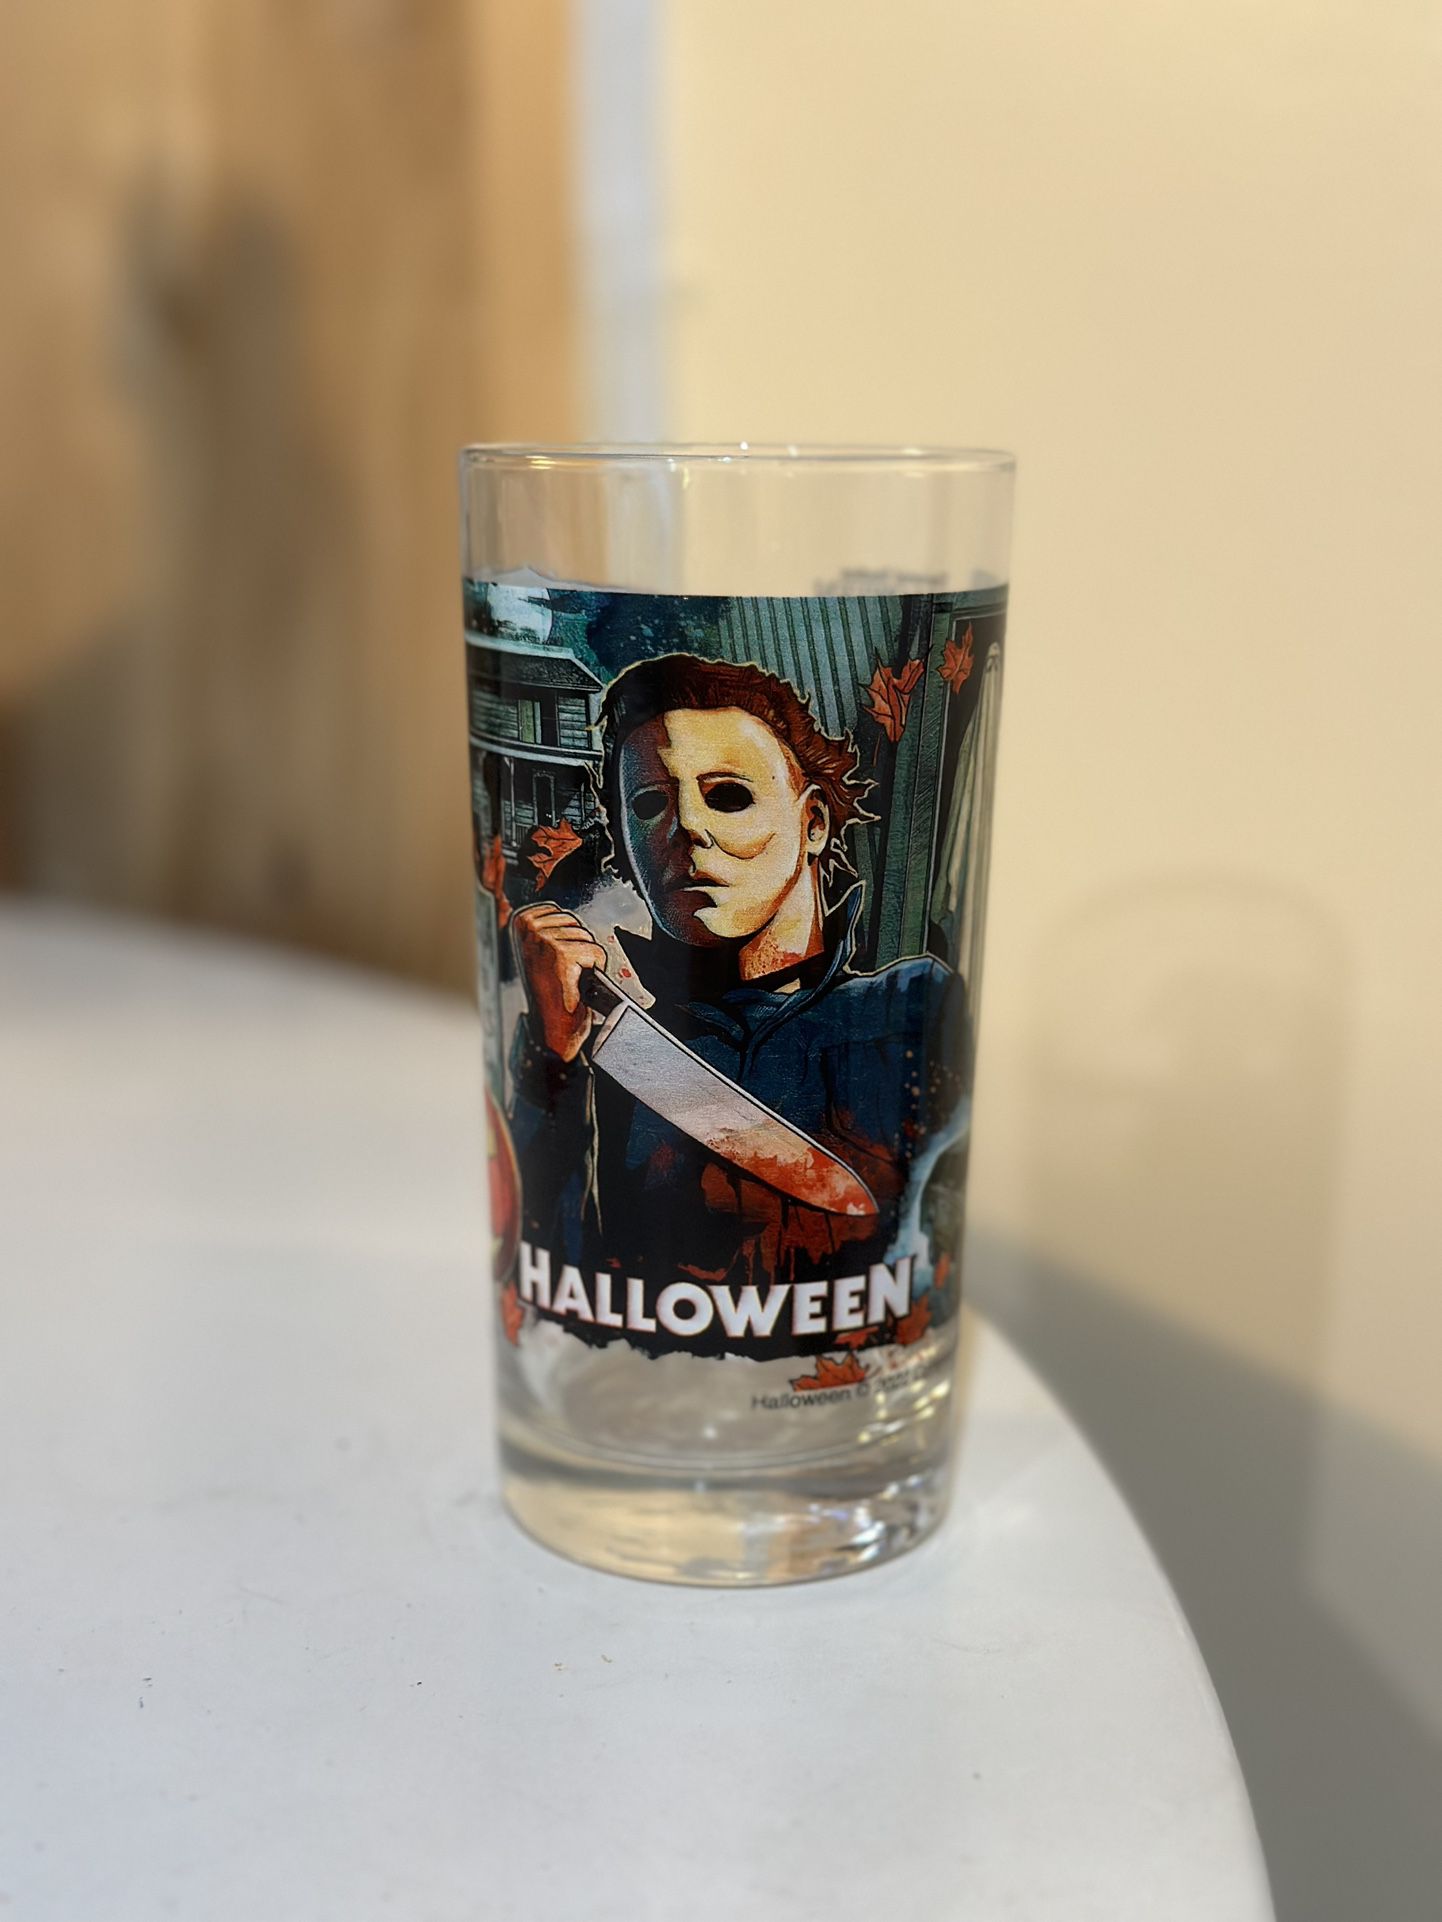 Universal Studios Halloween Horror Nights 2022 Halloween Collectible Glass Cup 